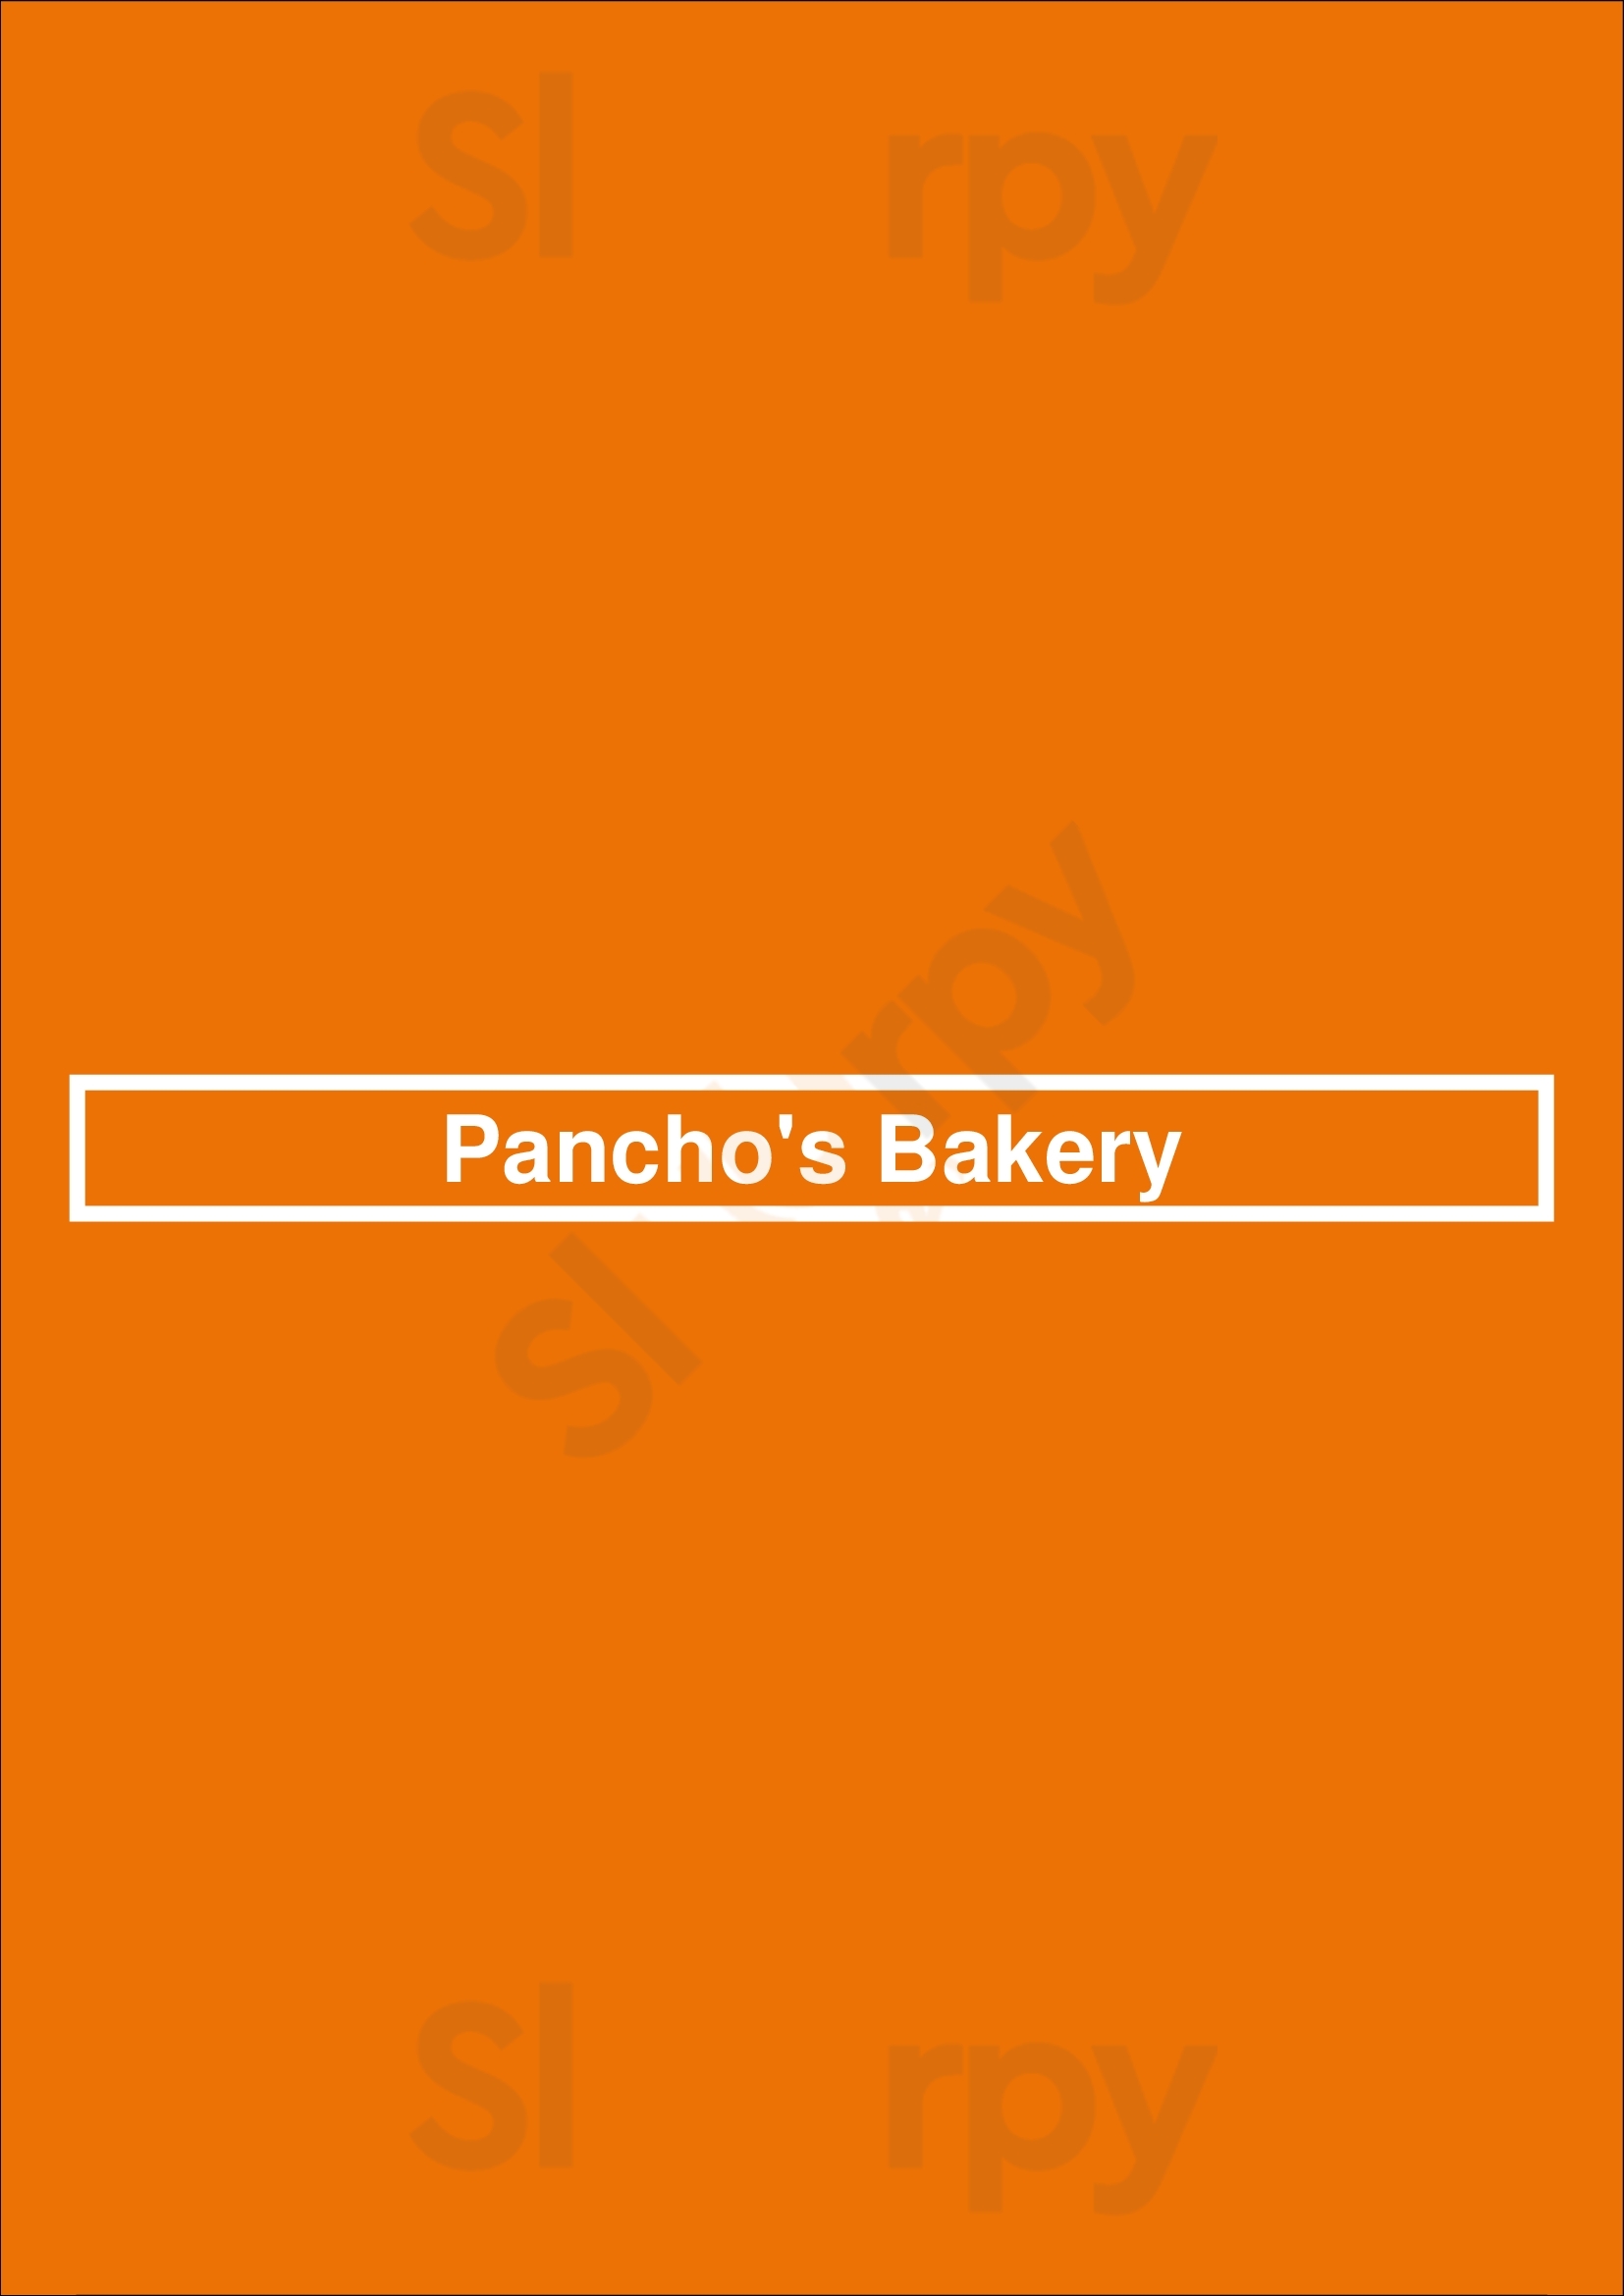 Pancho's Bakery Toronto Menu - 1